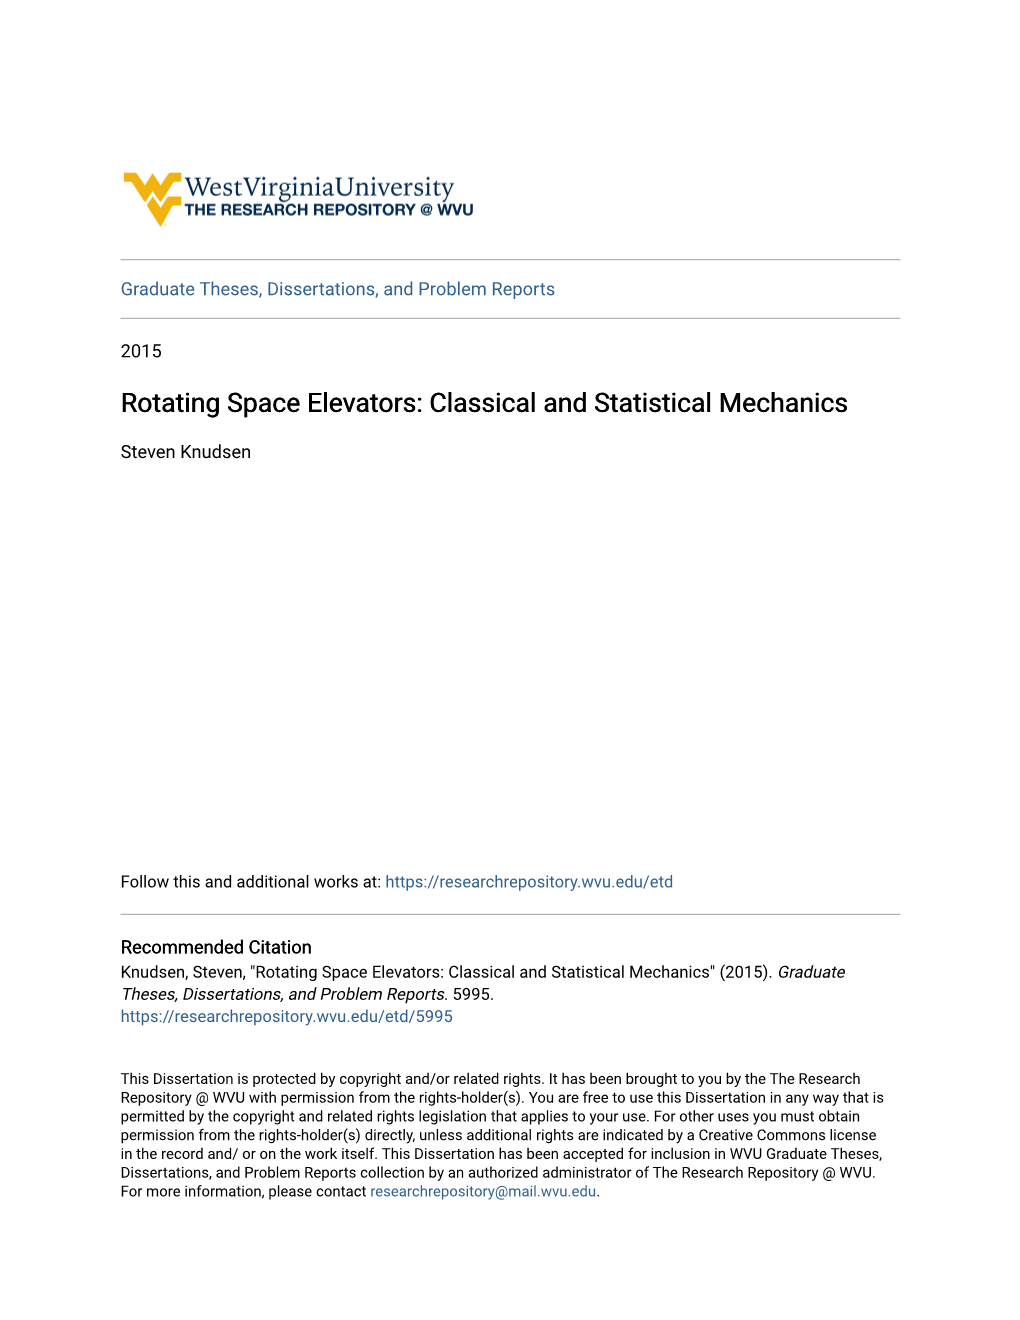 Rotating Space Elevators: Classical and Statistical Mechanics